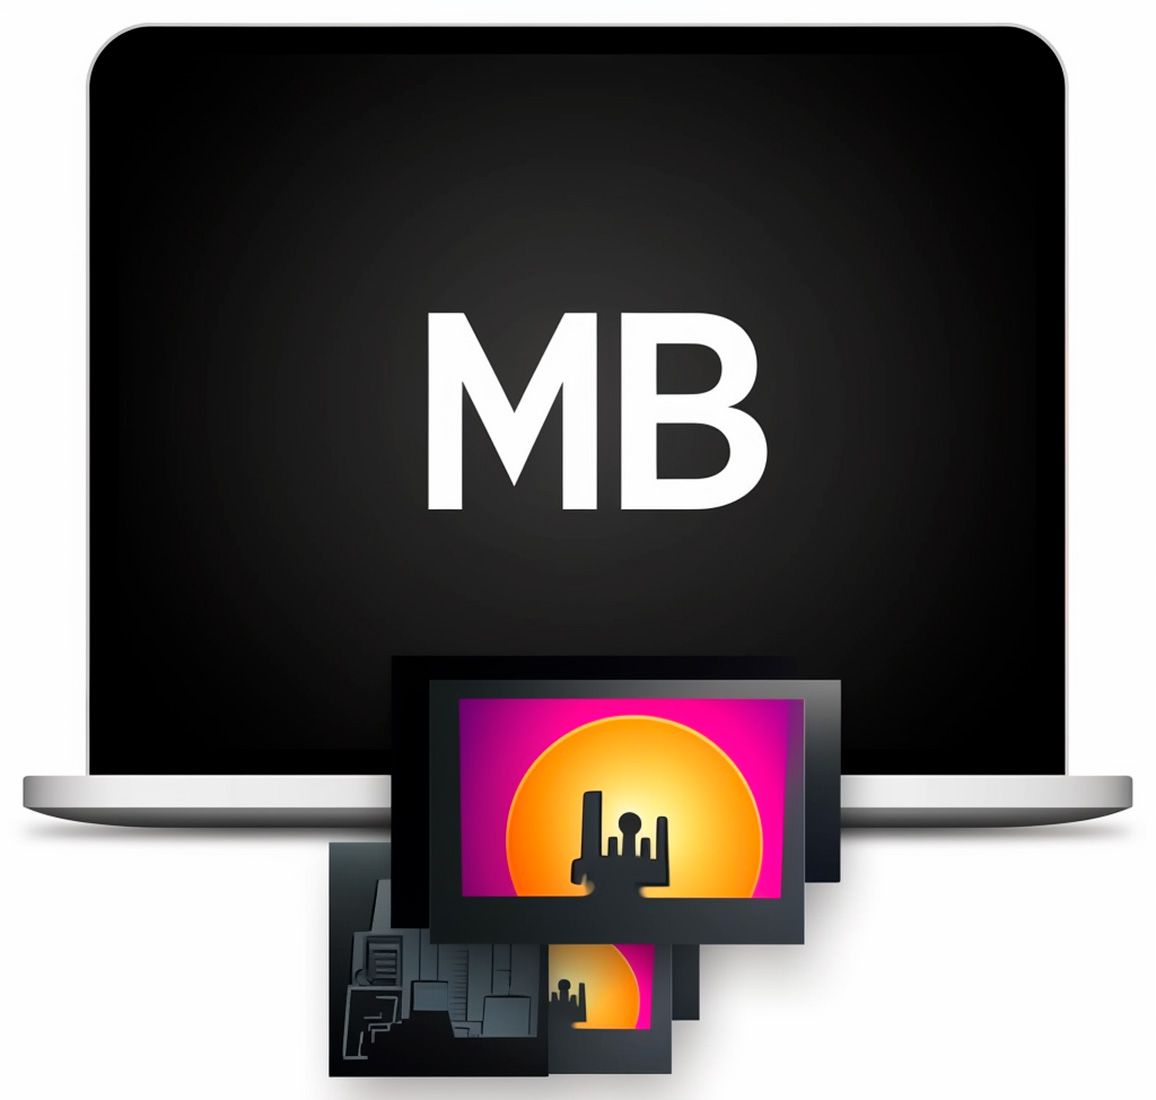 Reduce Image MB to KB..